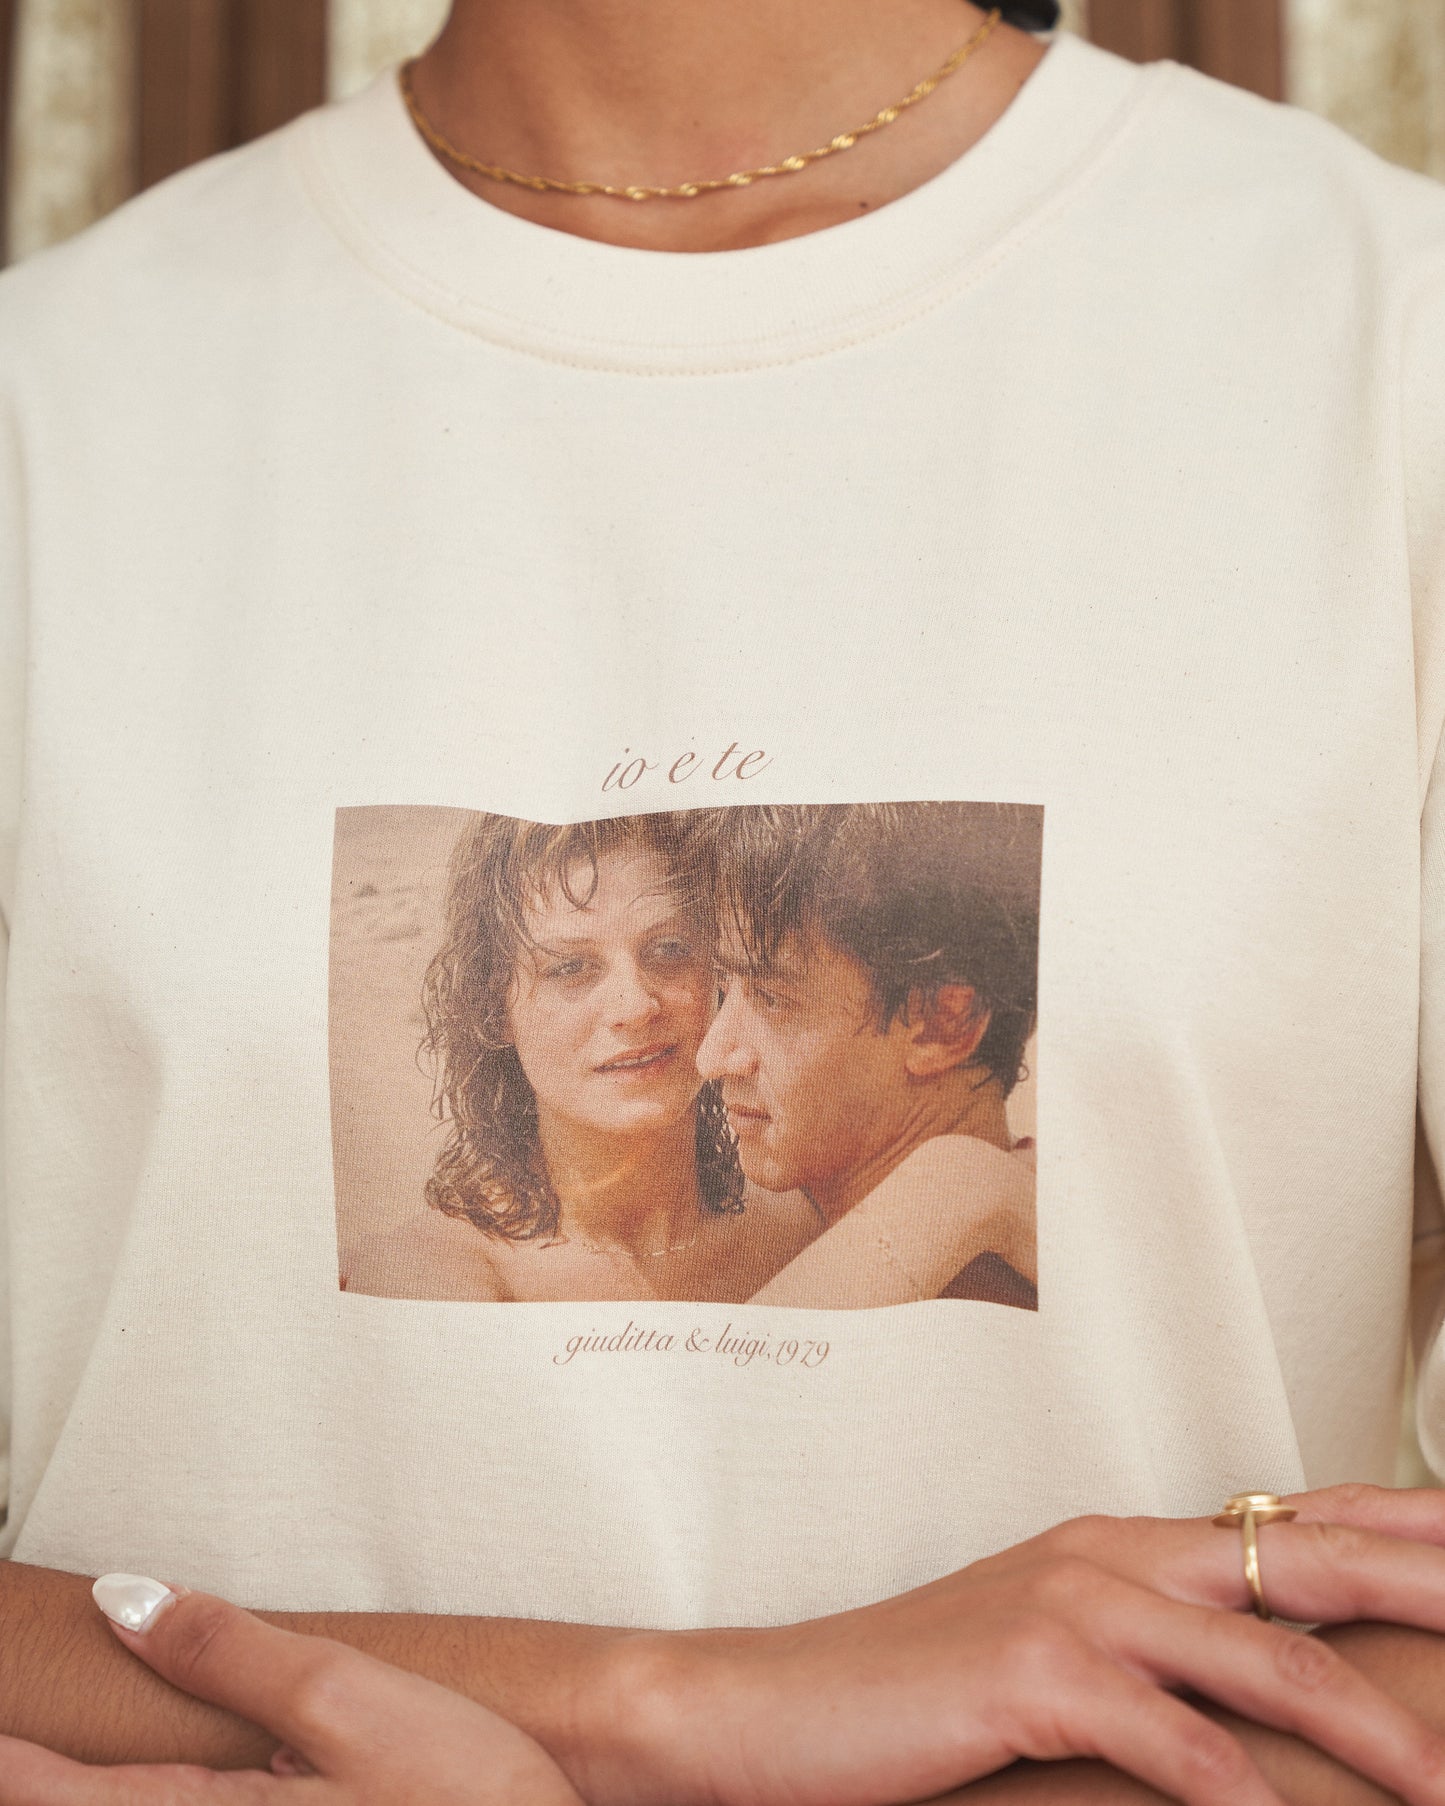 Amore T-shirt